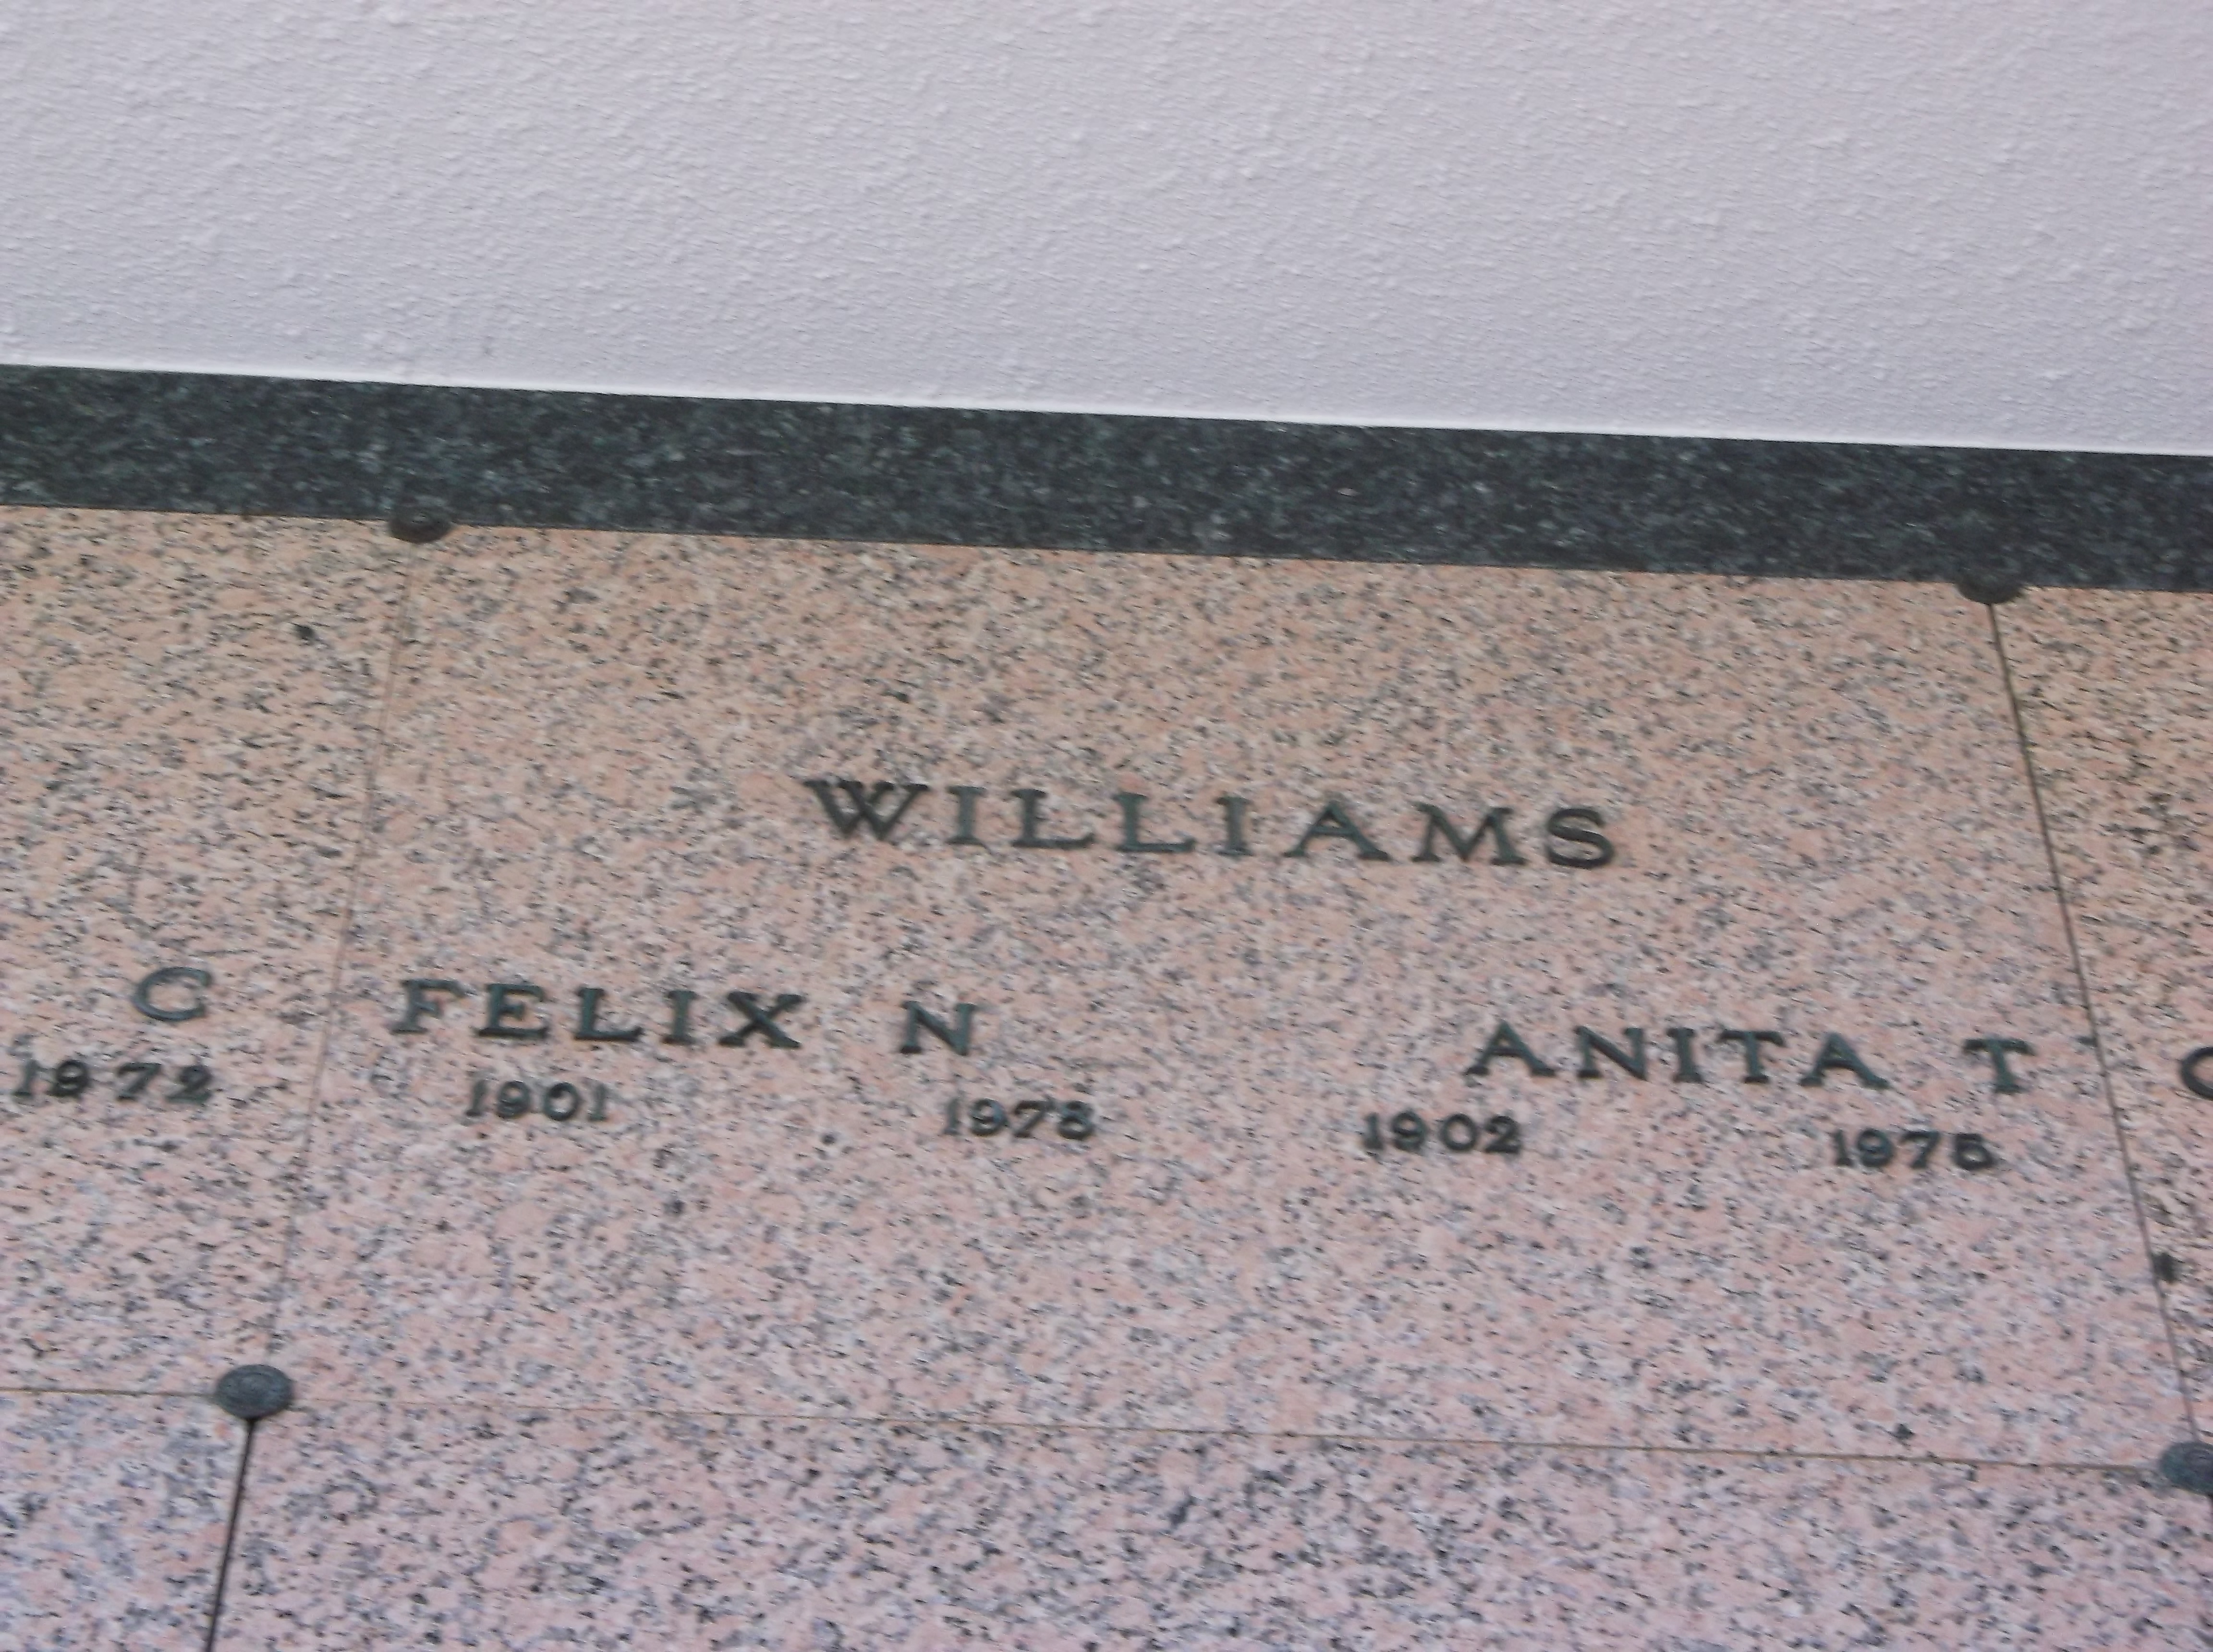 Felix N Williams